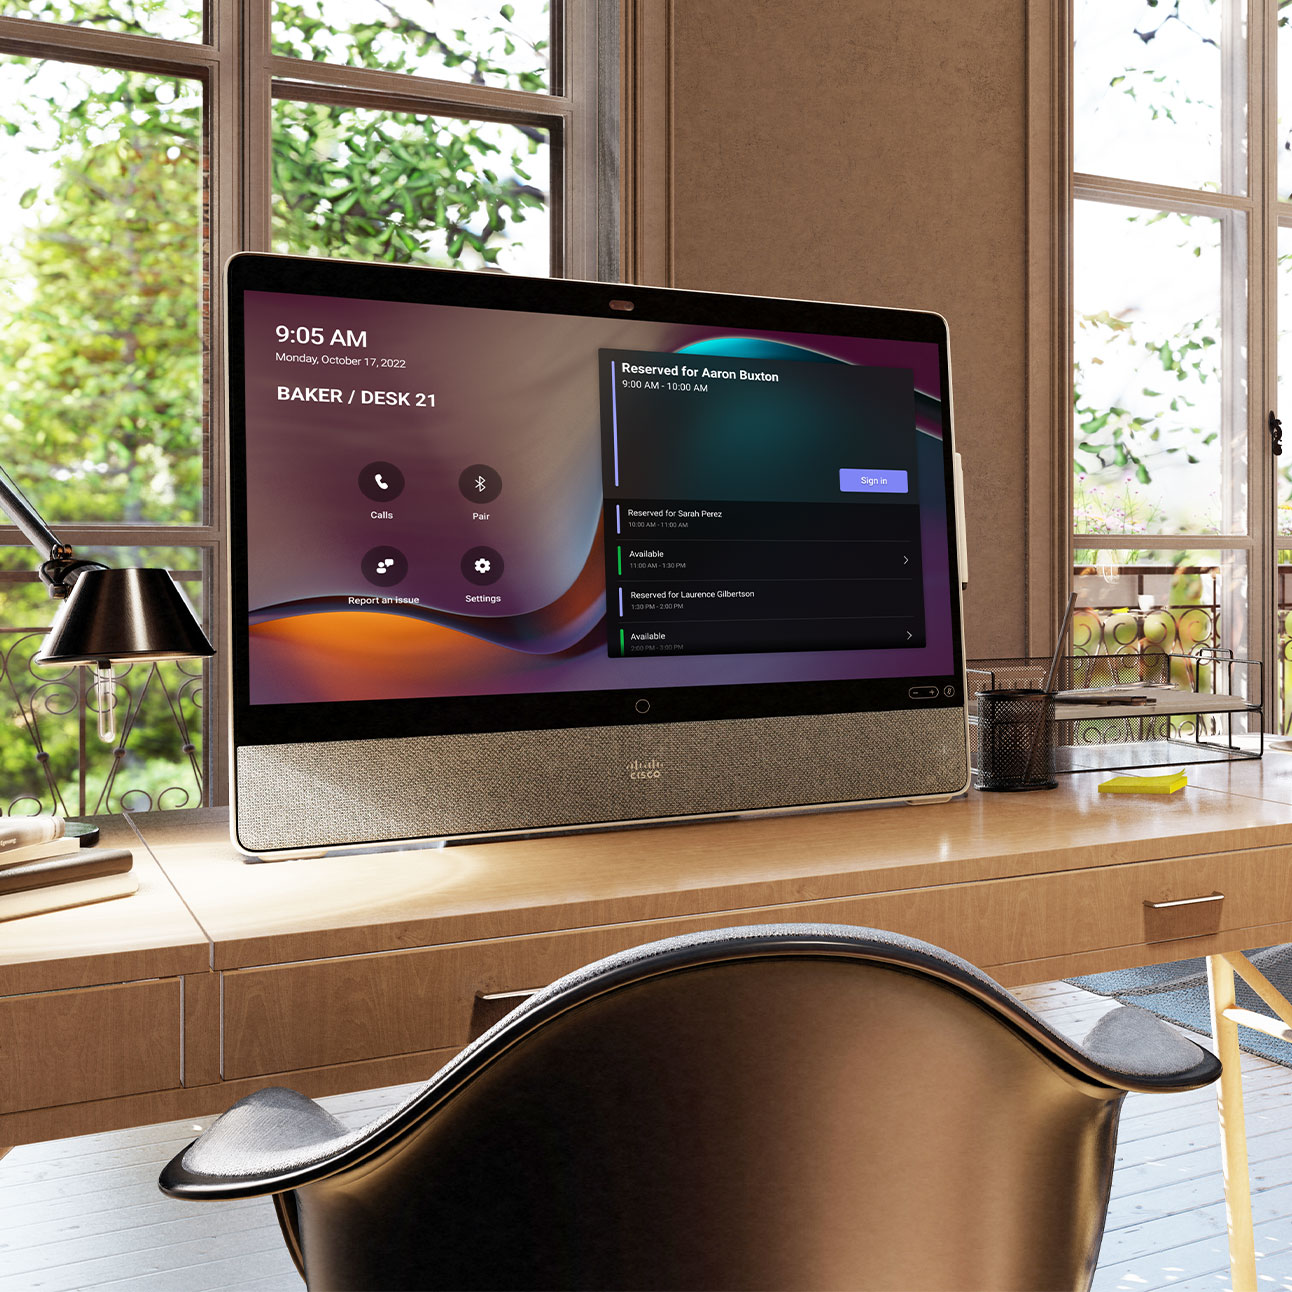 Microsoft Teams に対応したオールインワンのビデオ会議設備で、パーソナルなオフィス環境を実現。